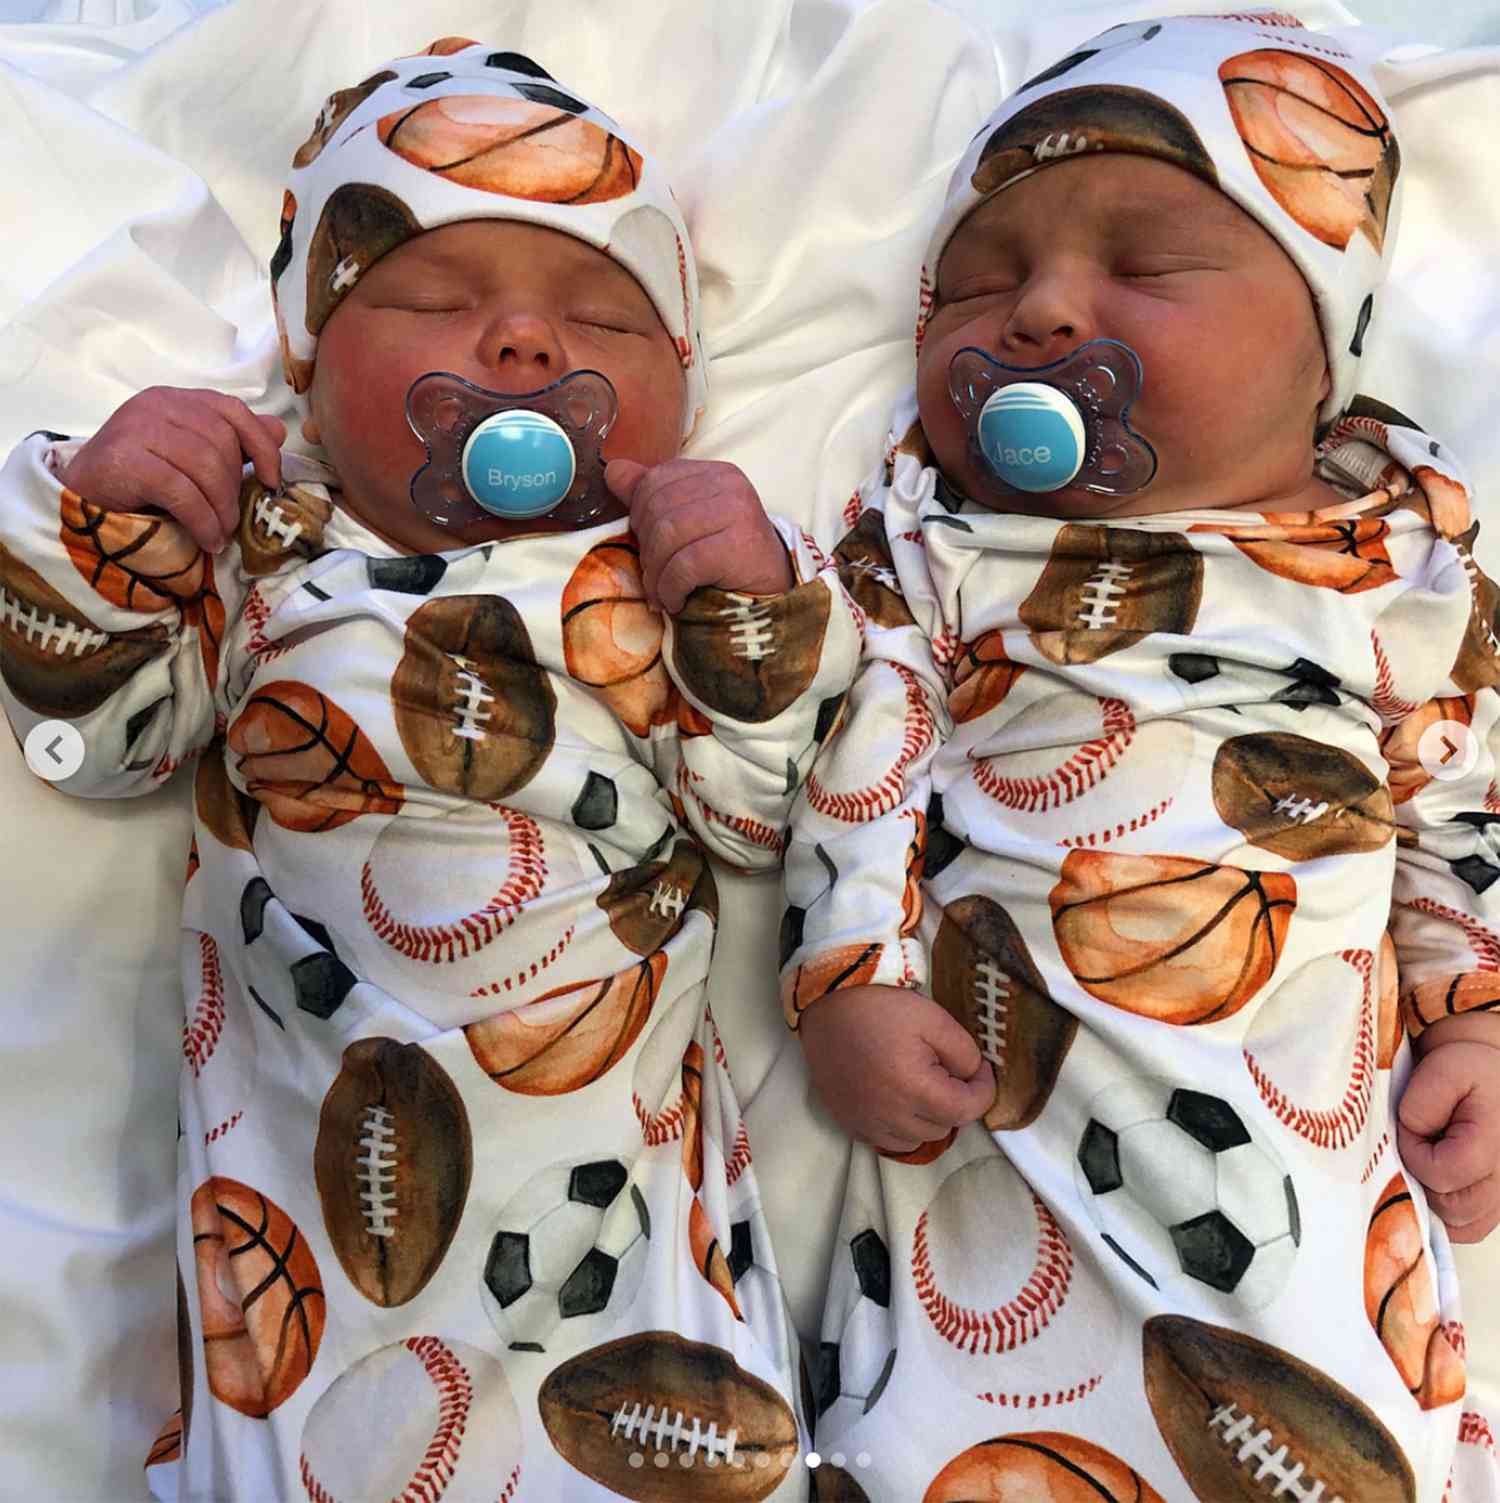 twins-give-birth-same-day-5